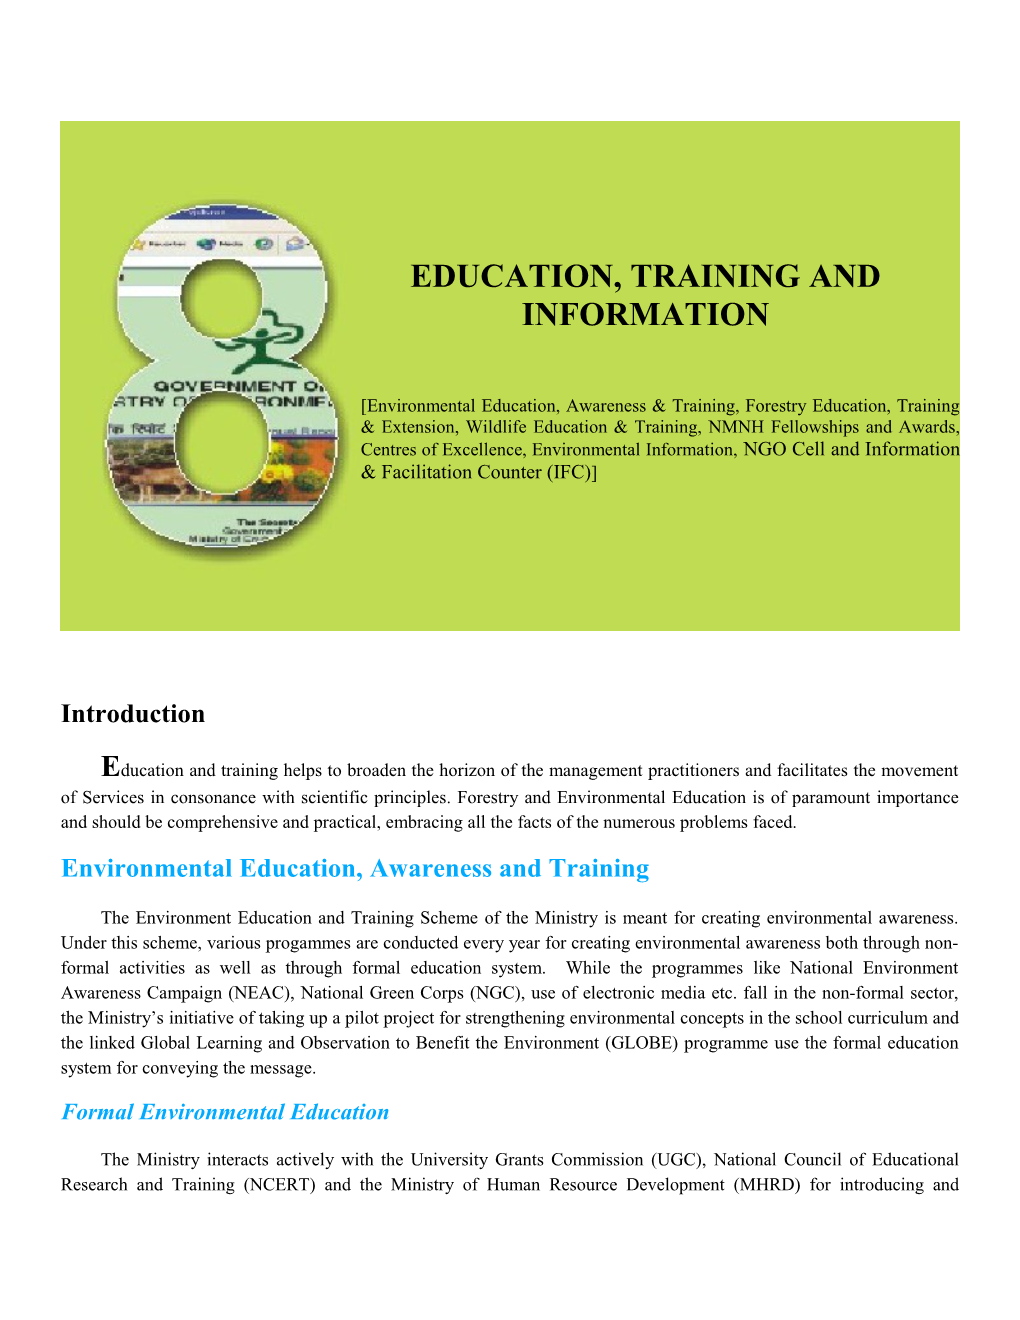 Environmental Education, Awareness and Training